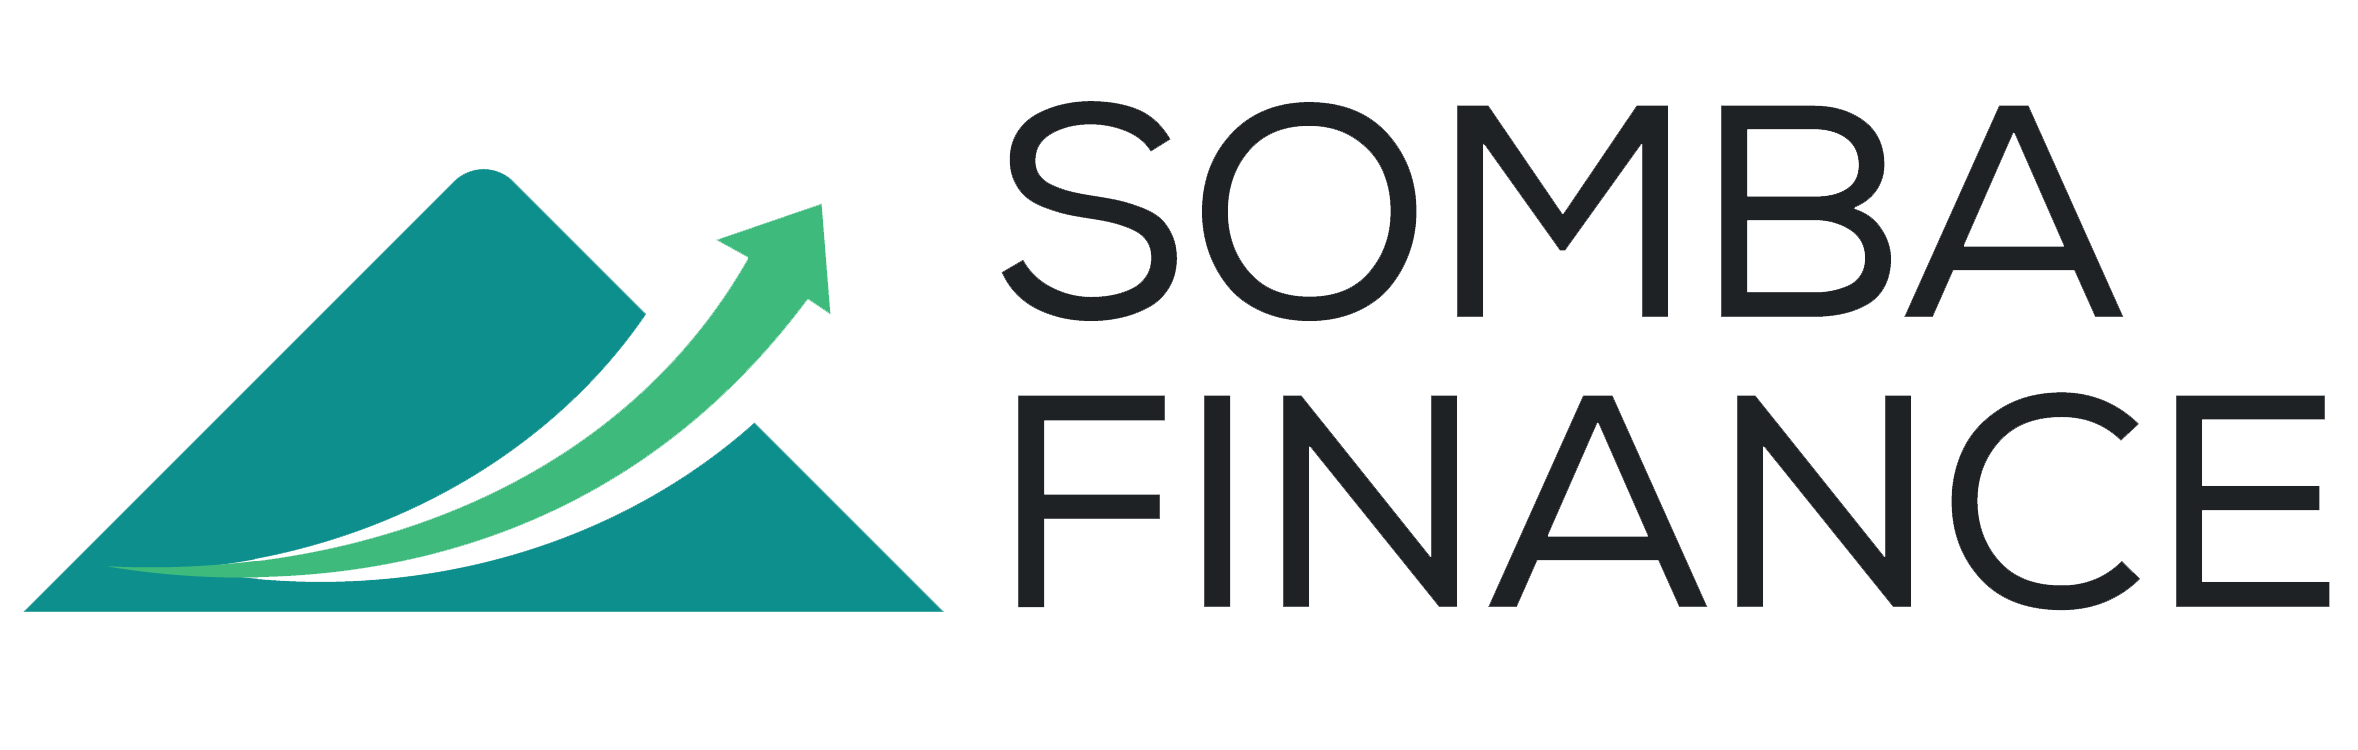 Somba Finance